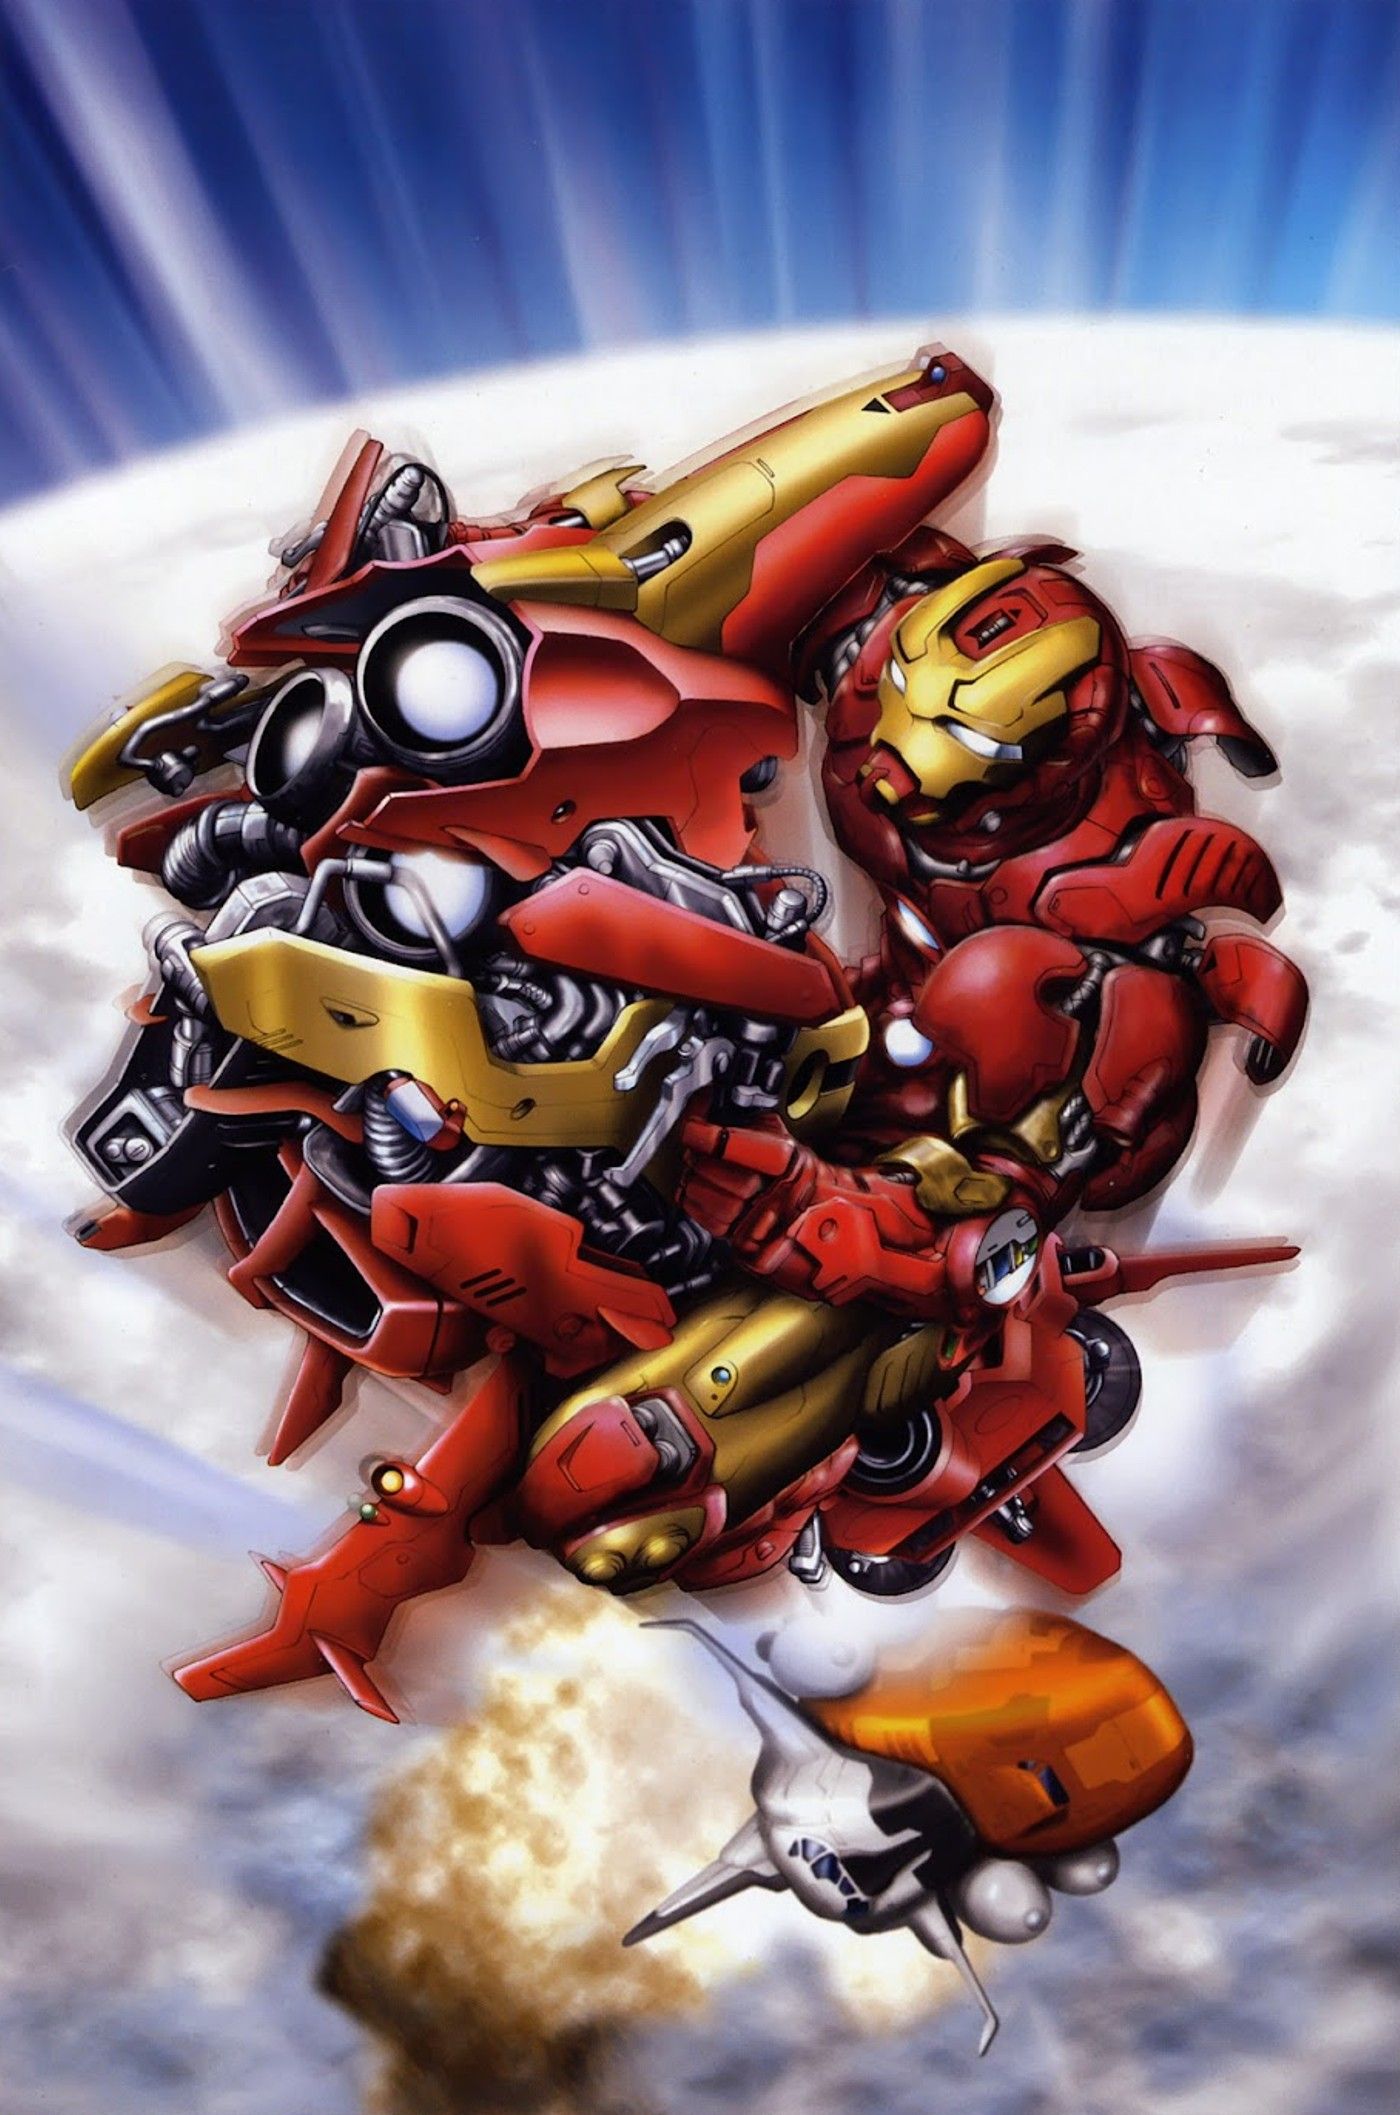 Iron Man armor transformers